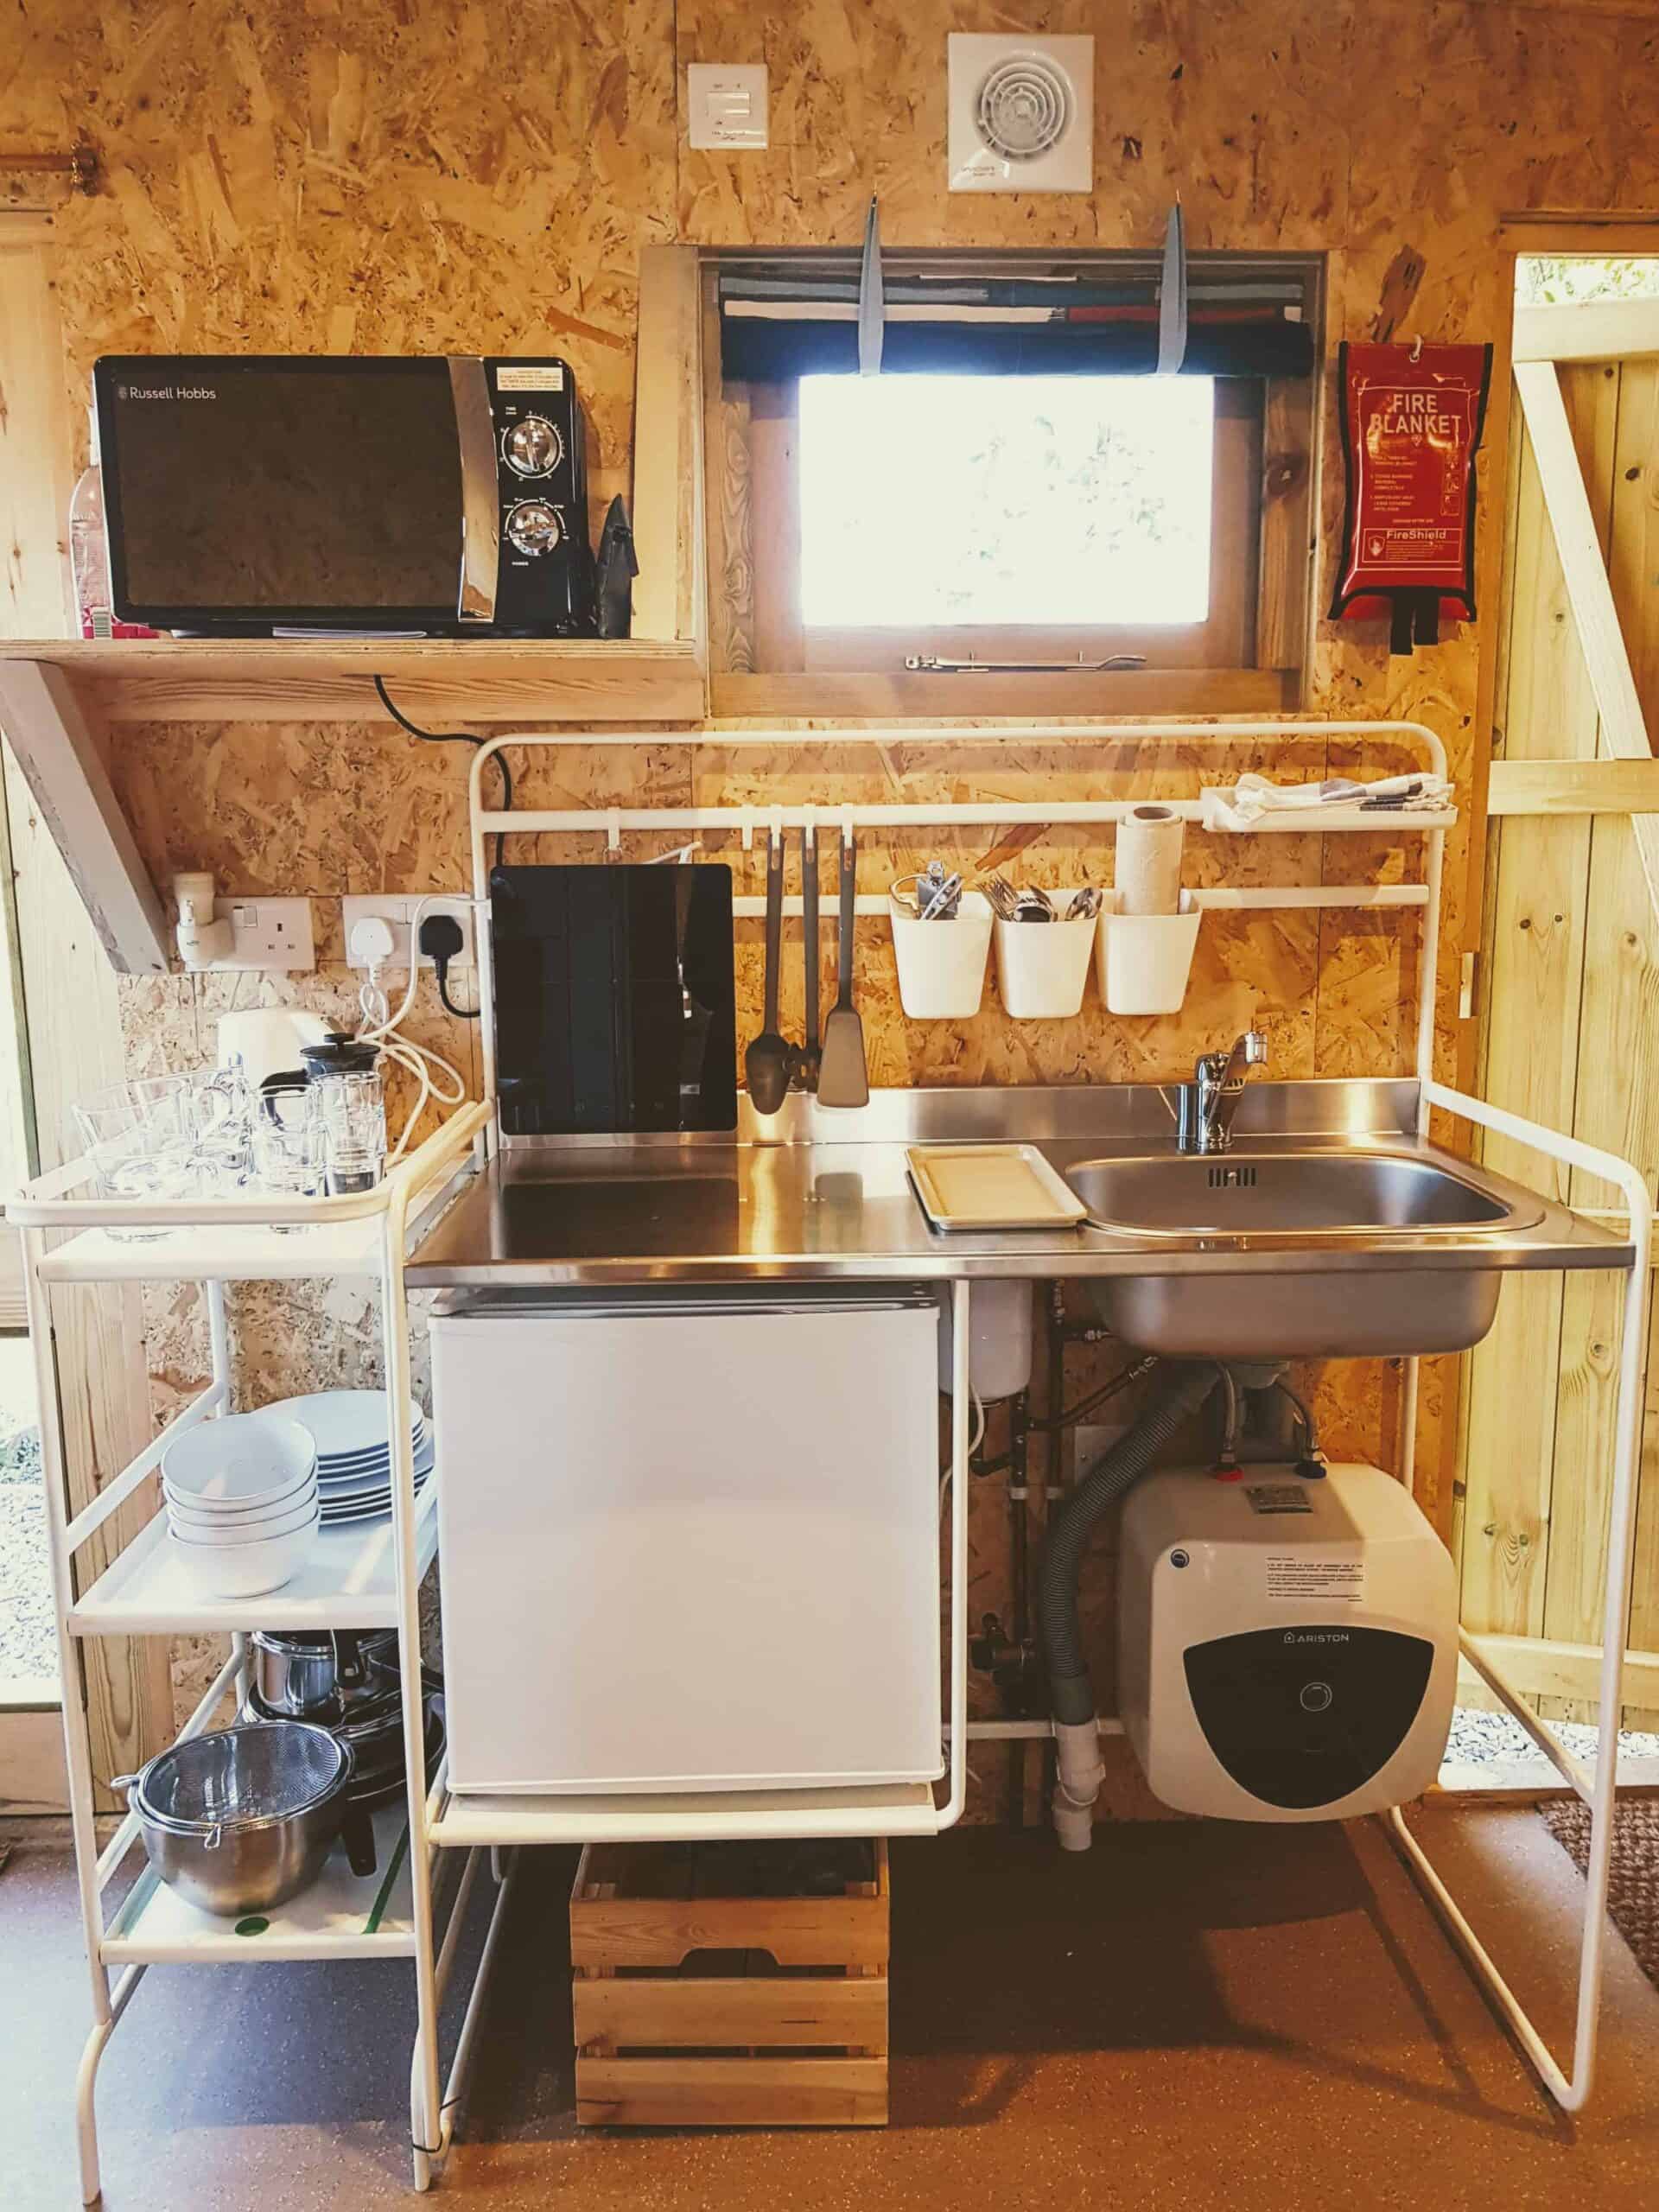 Cabin kitchenette with microwave, sink, hob, fridge, water heater, pots, pans, crockery